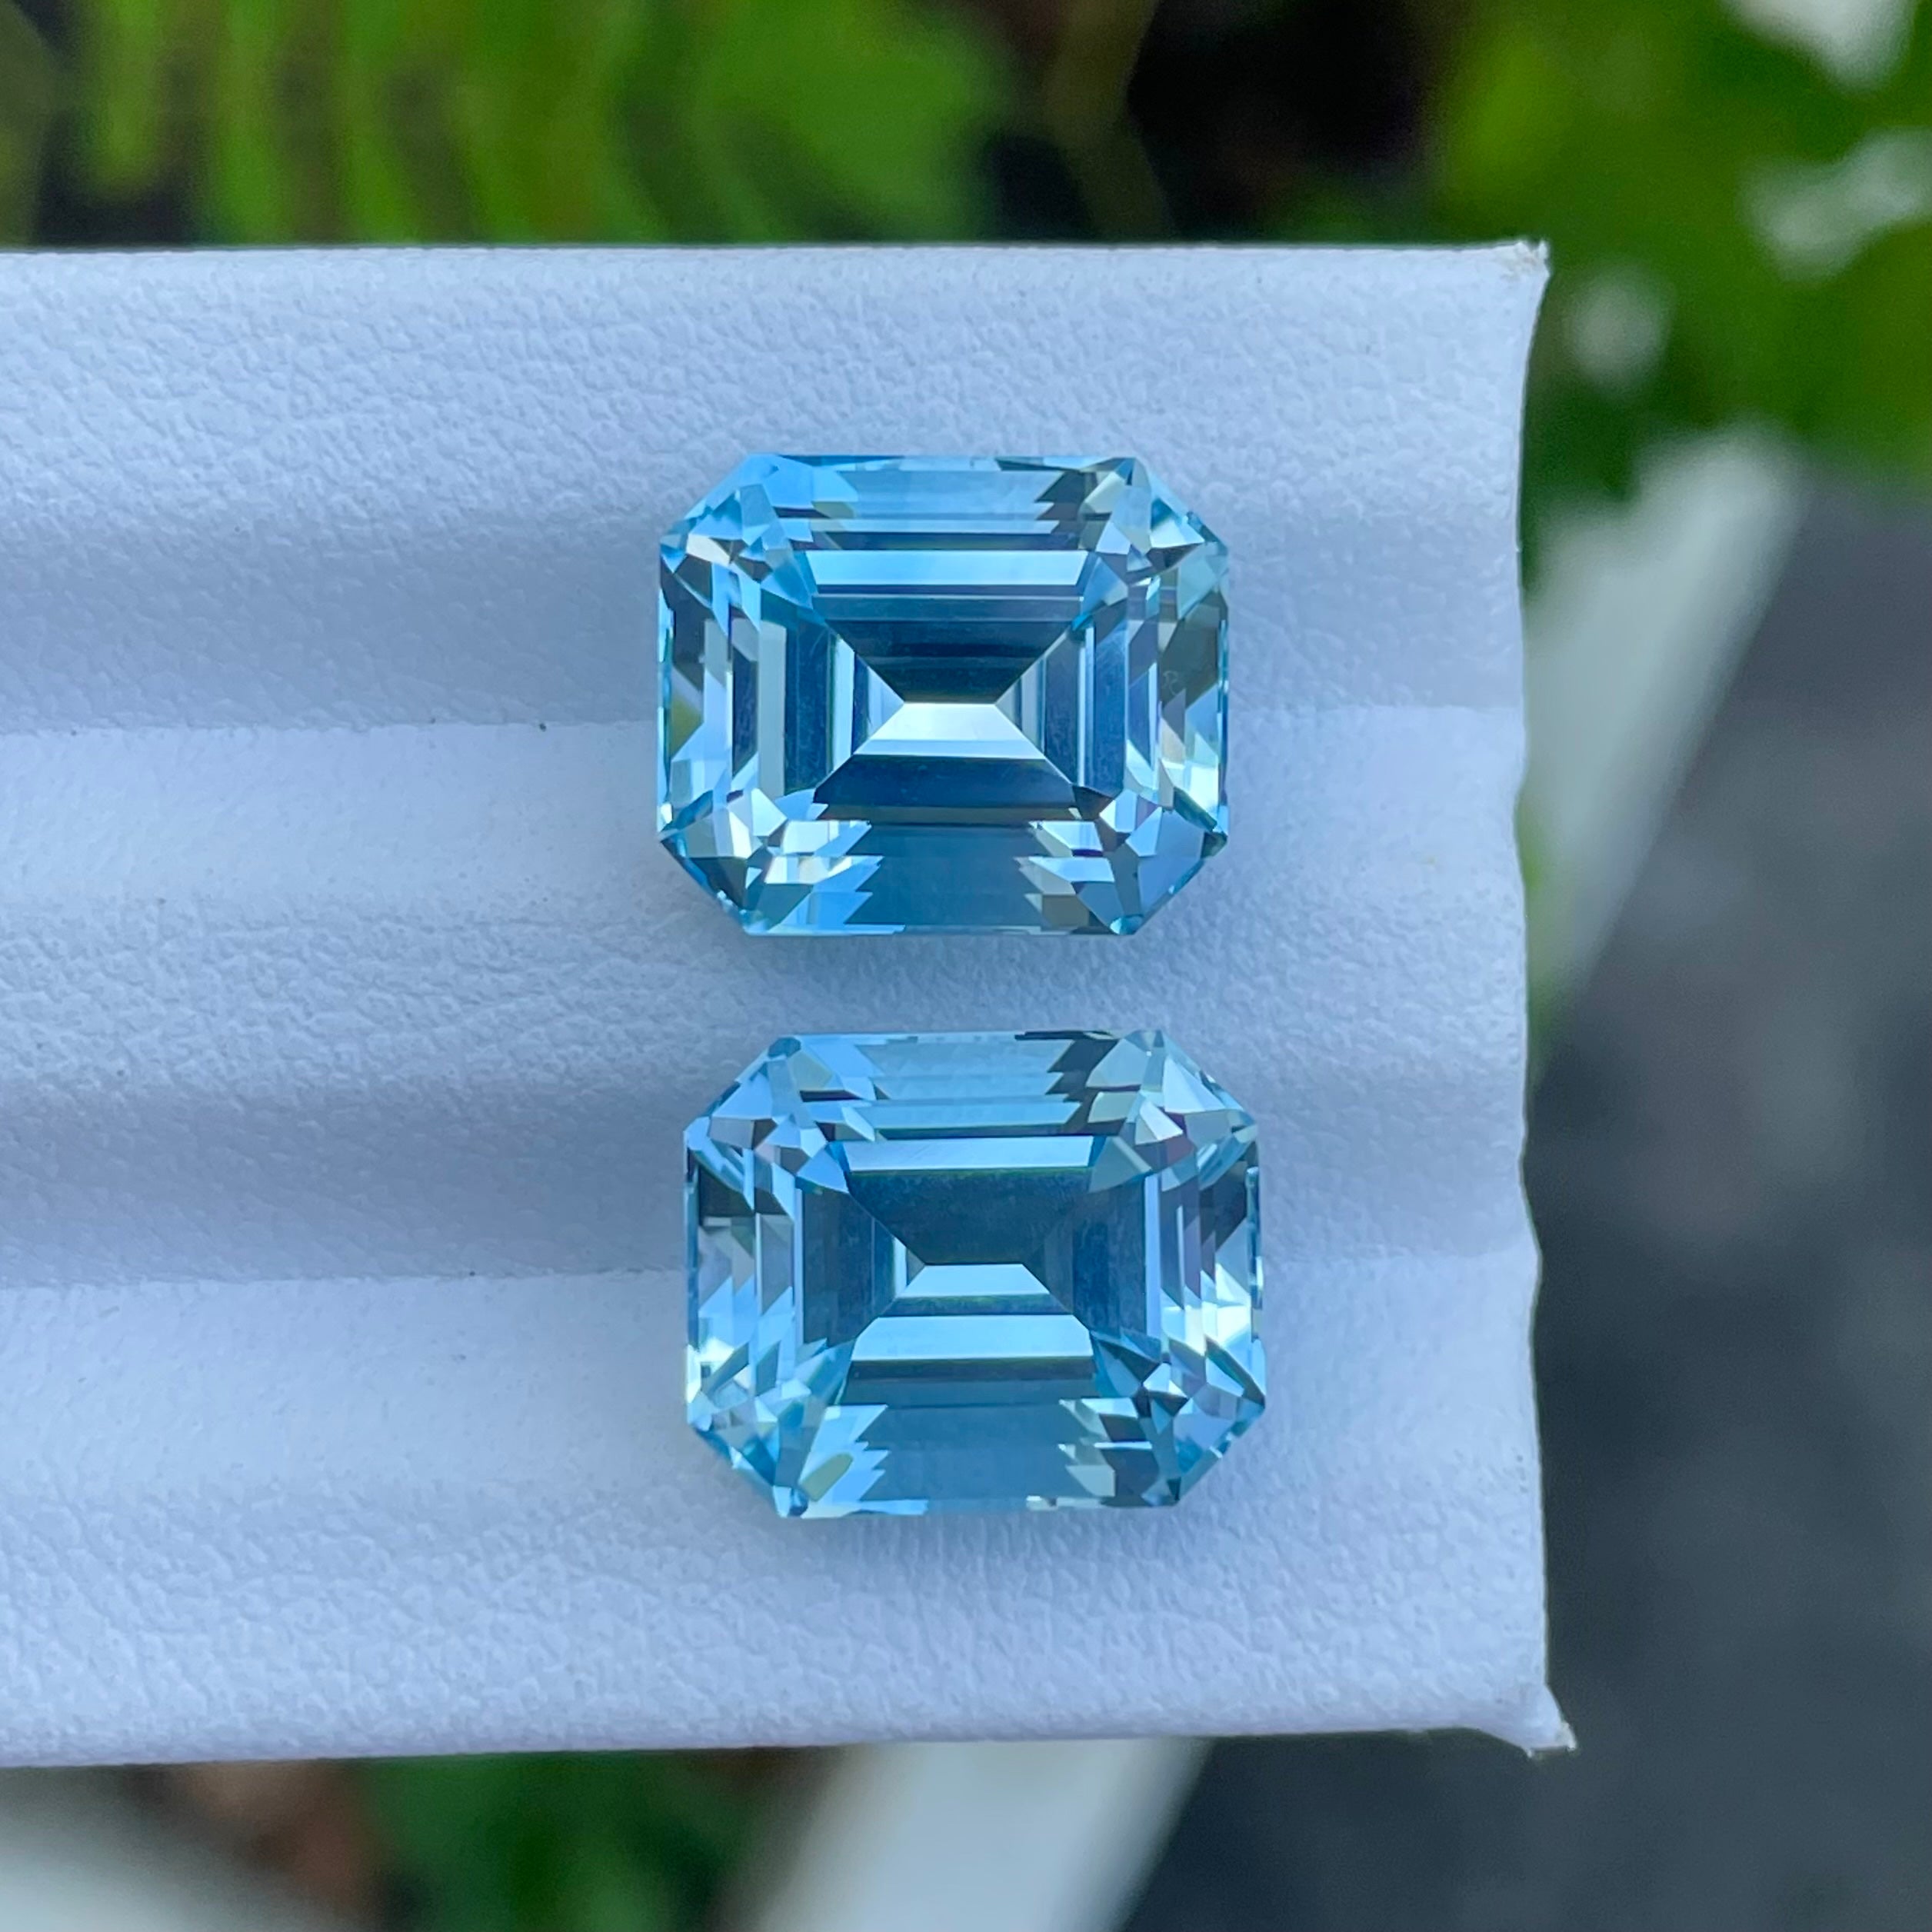 Adorable Beauty of Swiss Blue Topaz Pair 20.65 carats Emerald Cut Natural Madagascar's Gems